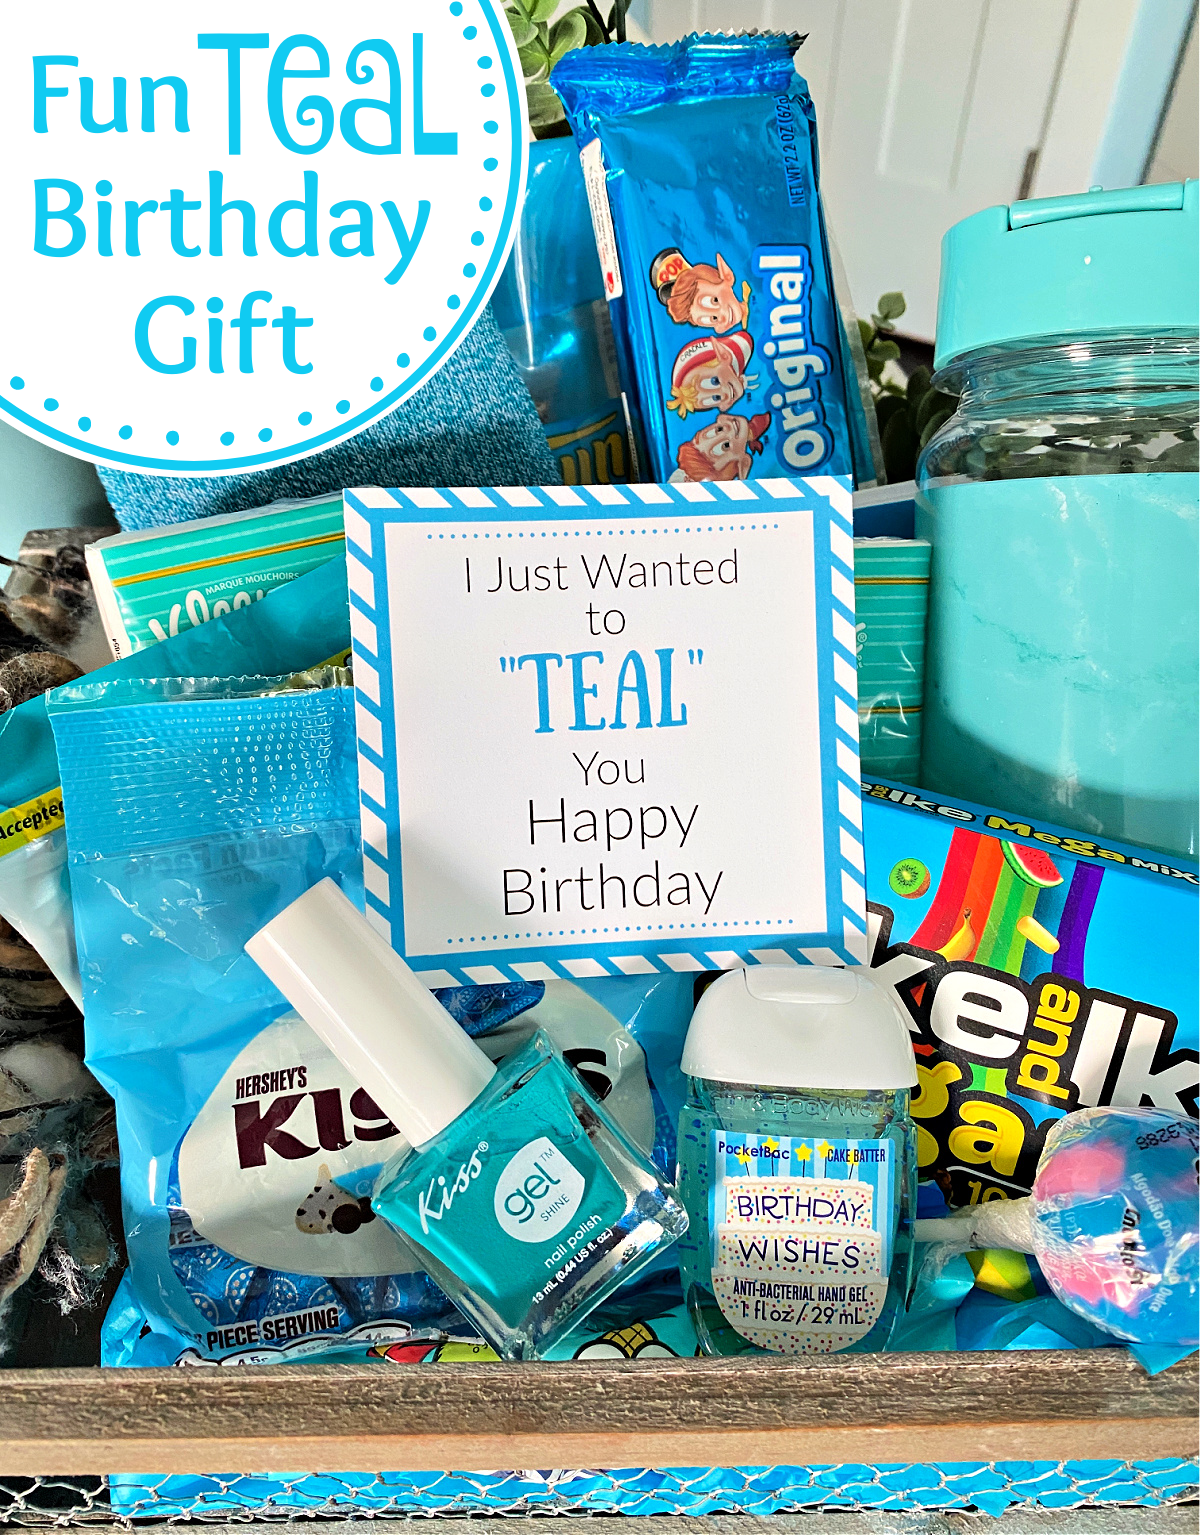 Fun Teal Themed Birthday Gift: